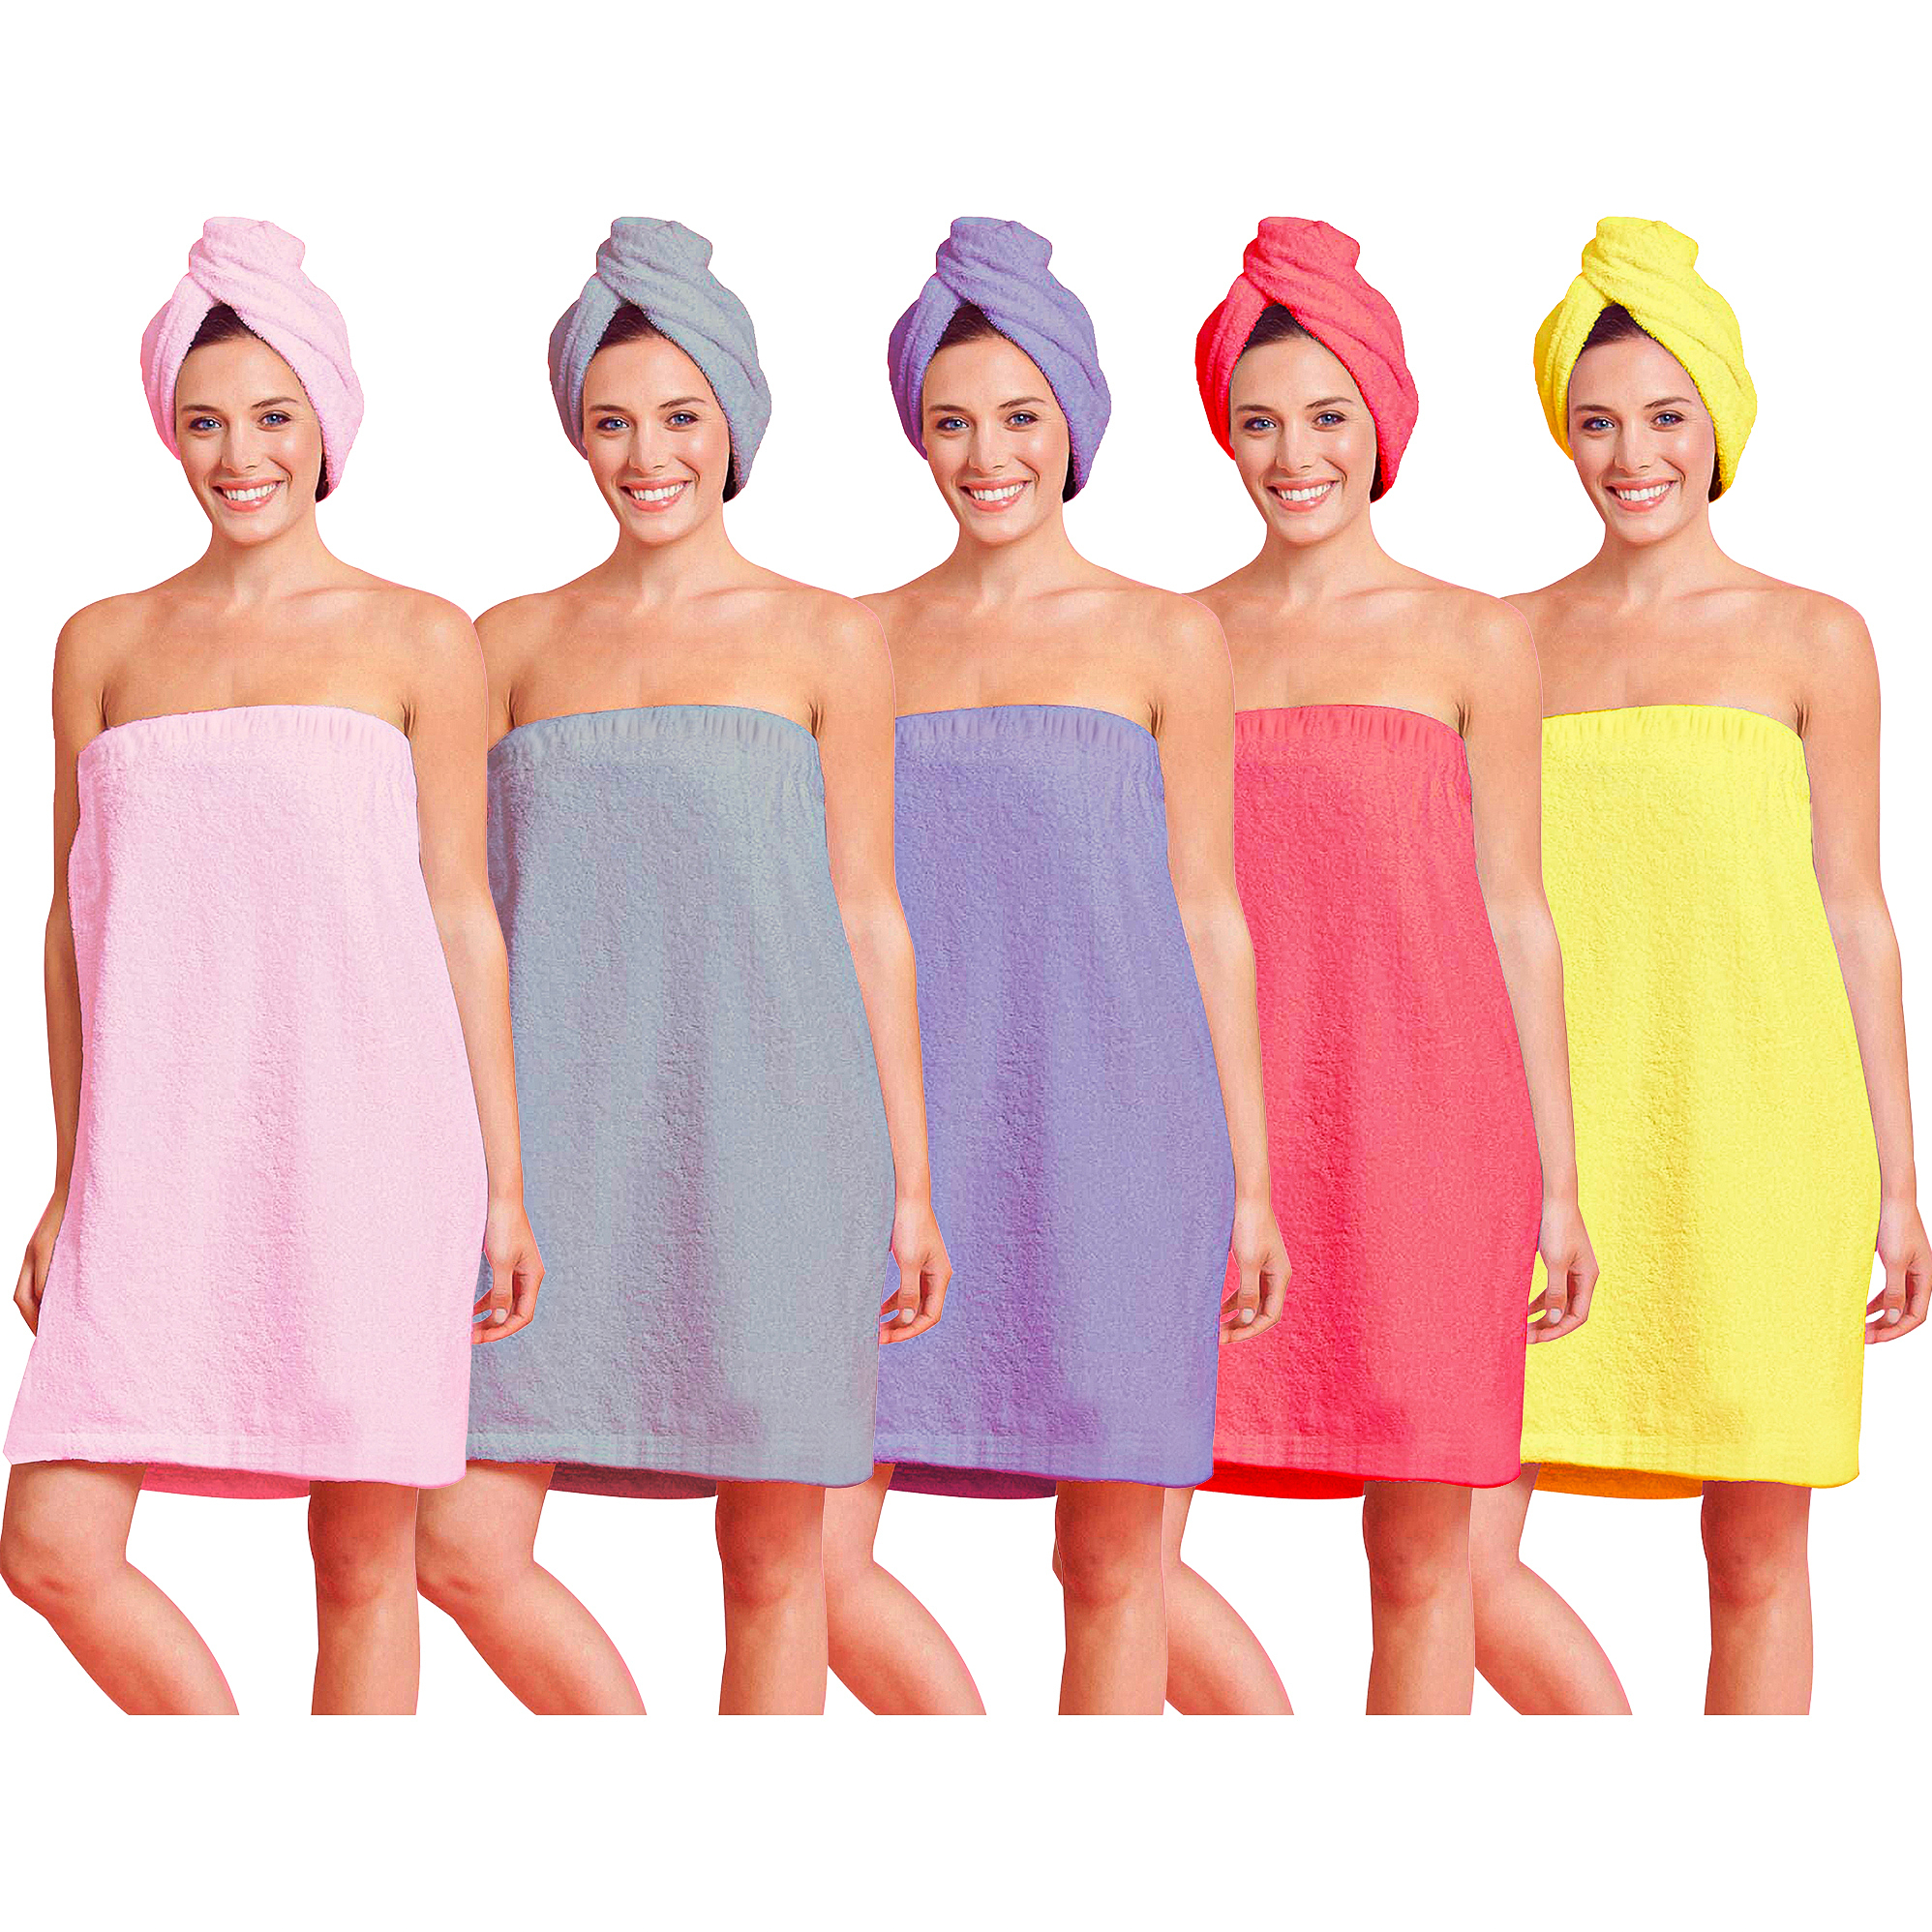 2-Piece Women's Spa Body Wrap & Hair Towel - Blue